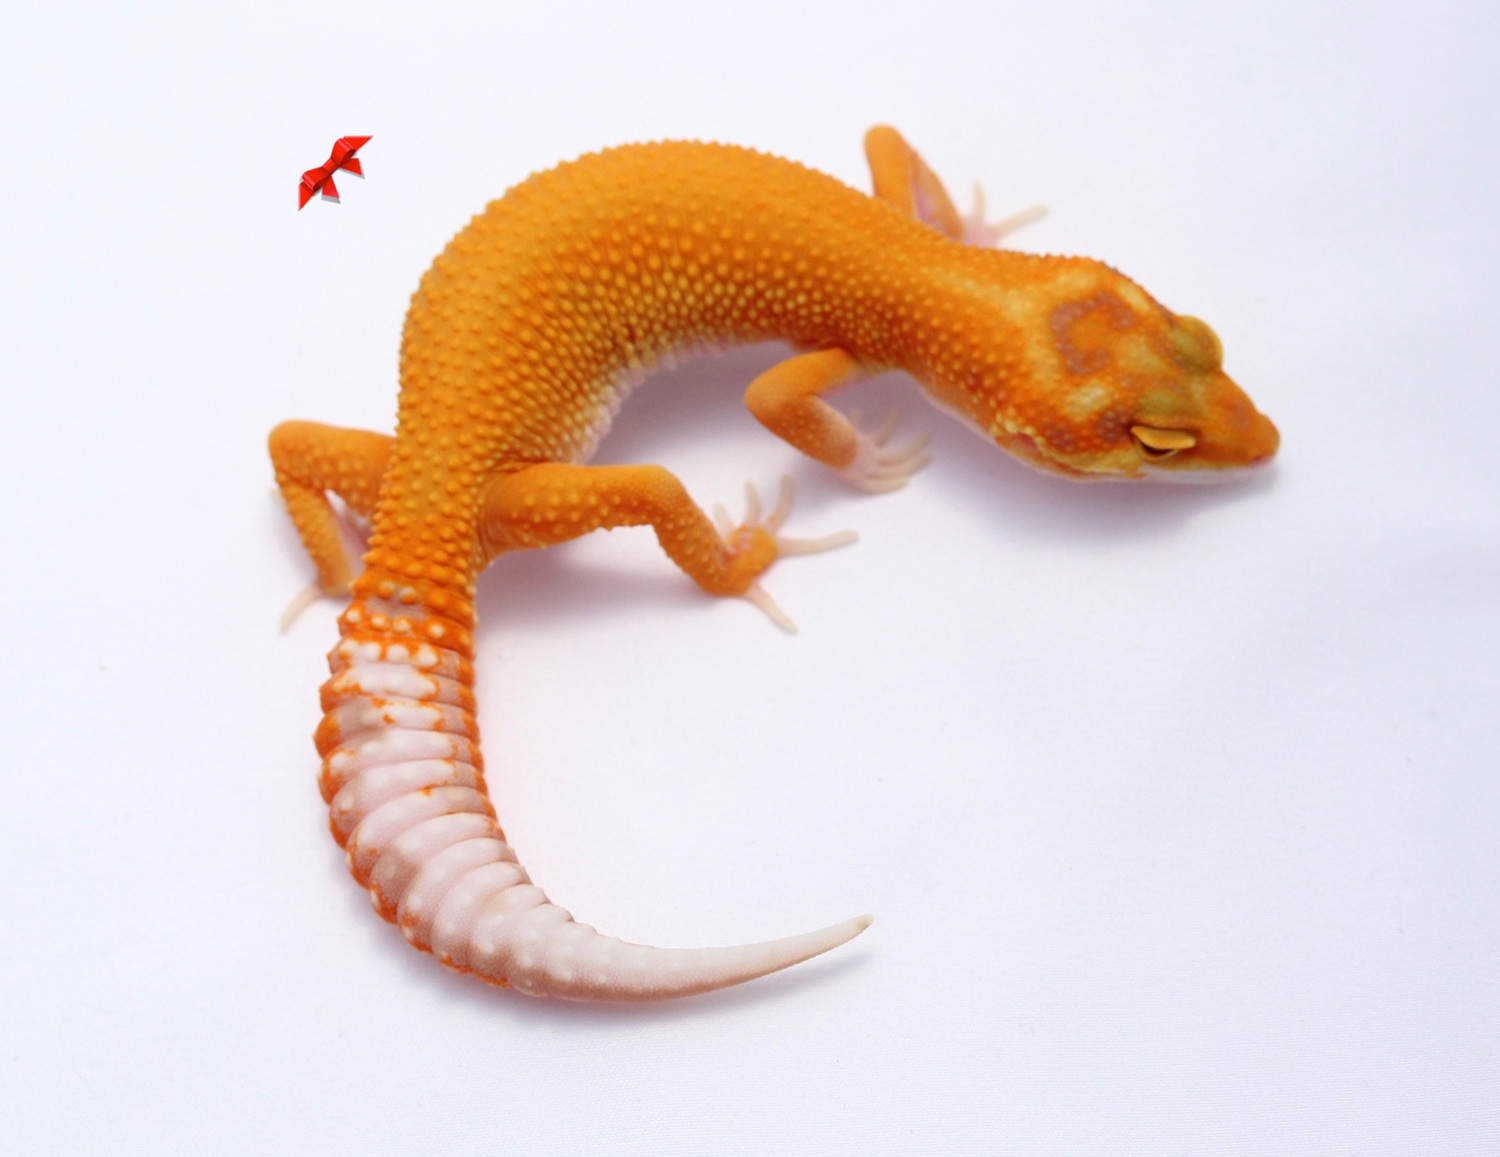 Extreme Emerine X G-Project Tremper Leopard Gecko by Bold & Bright Geckos